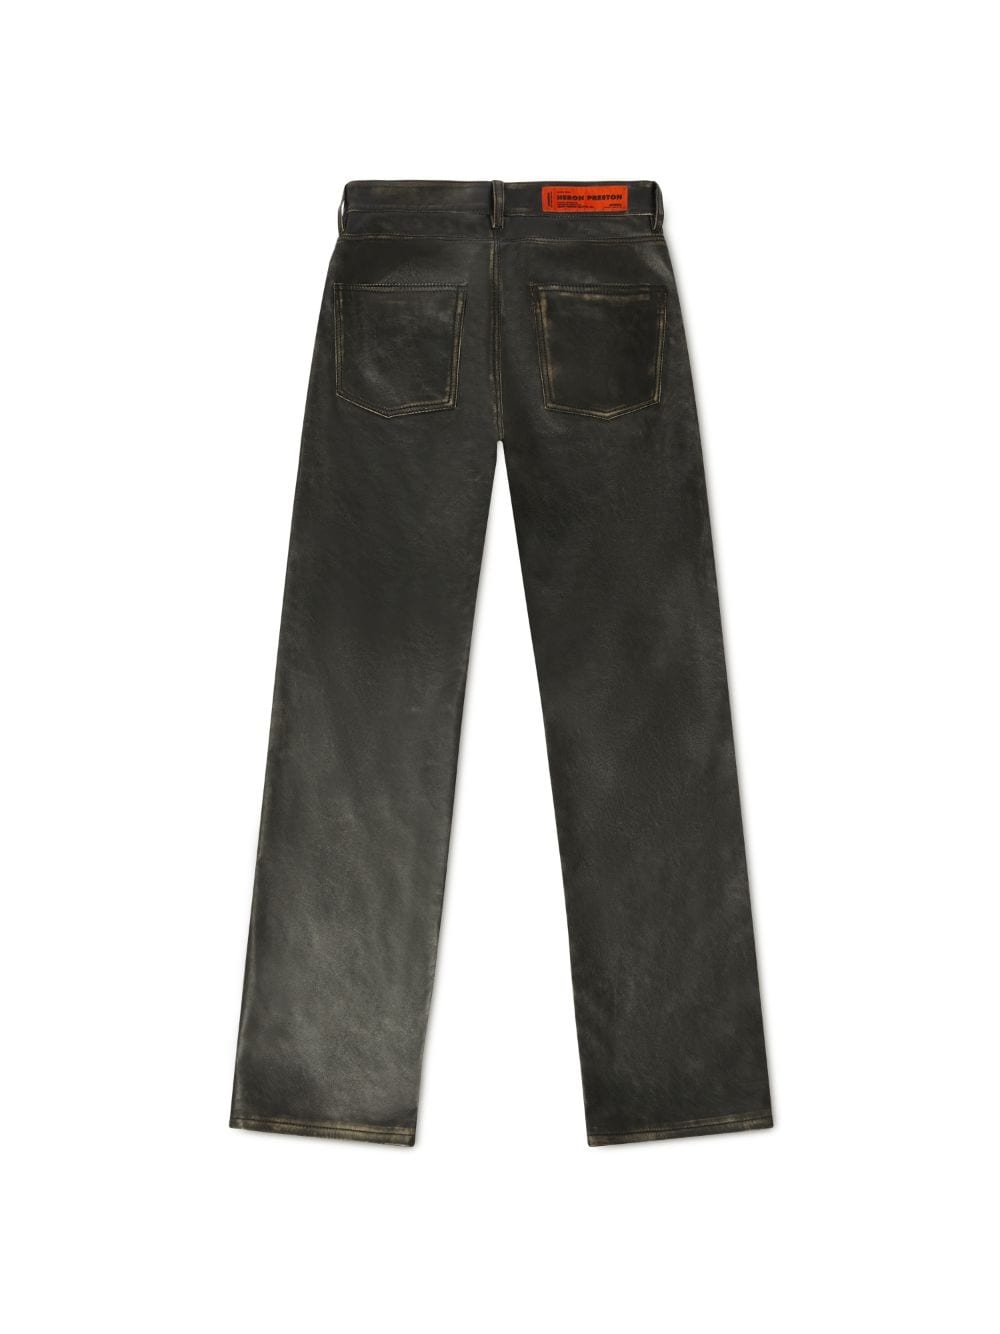 Distressed Leather Reg Pants - 2